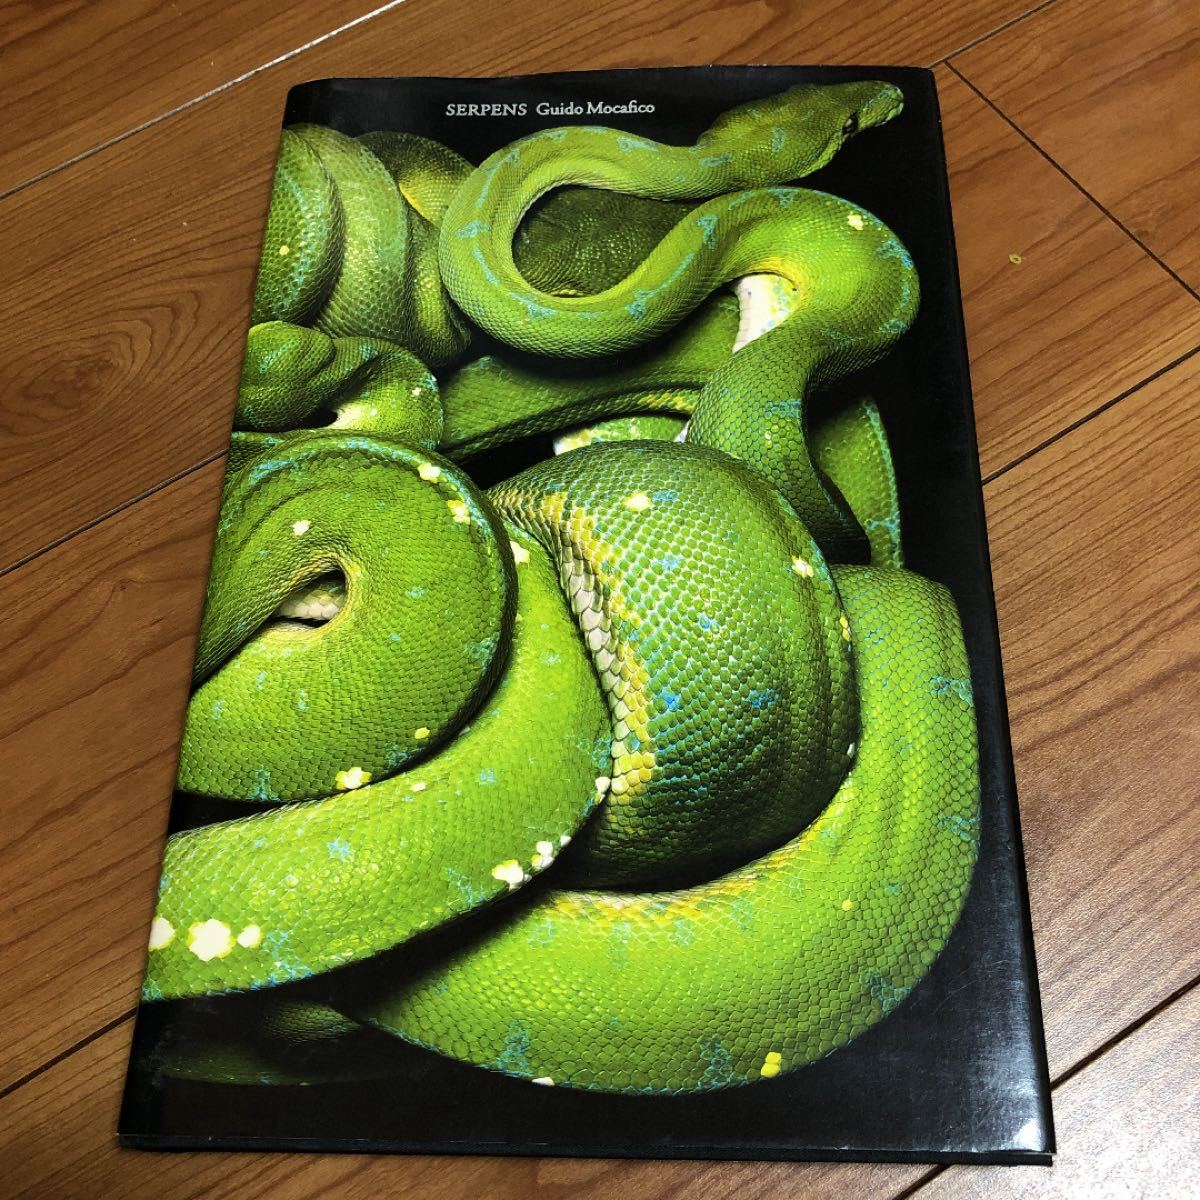 Guido Mocafico Serpens ハードカバー / 爬虫類 蛇 ヘビ